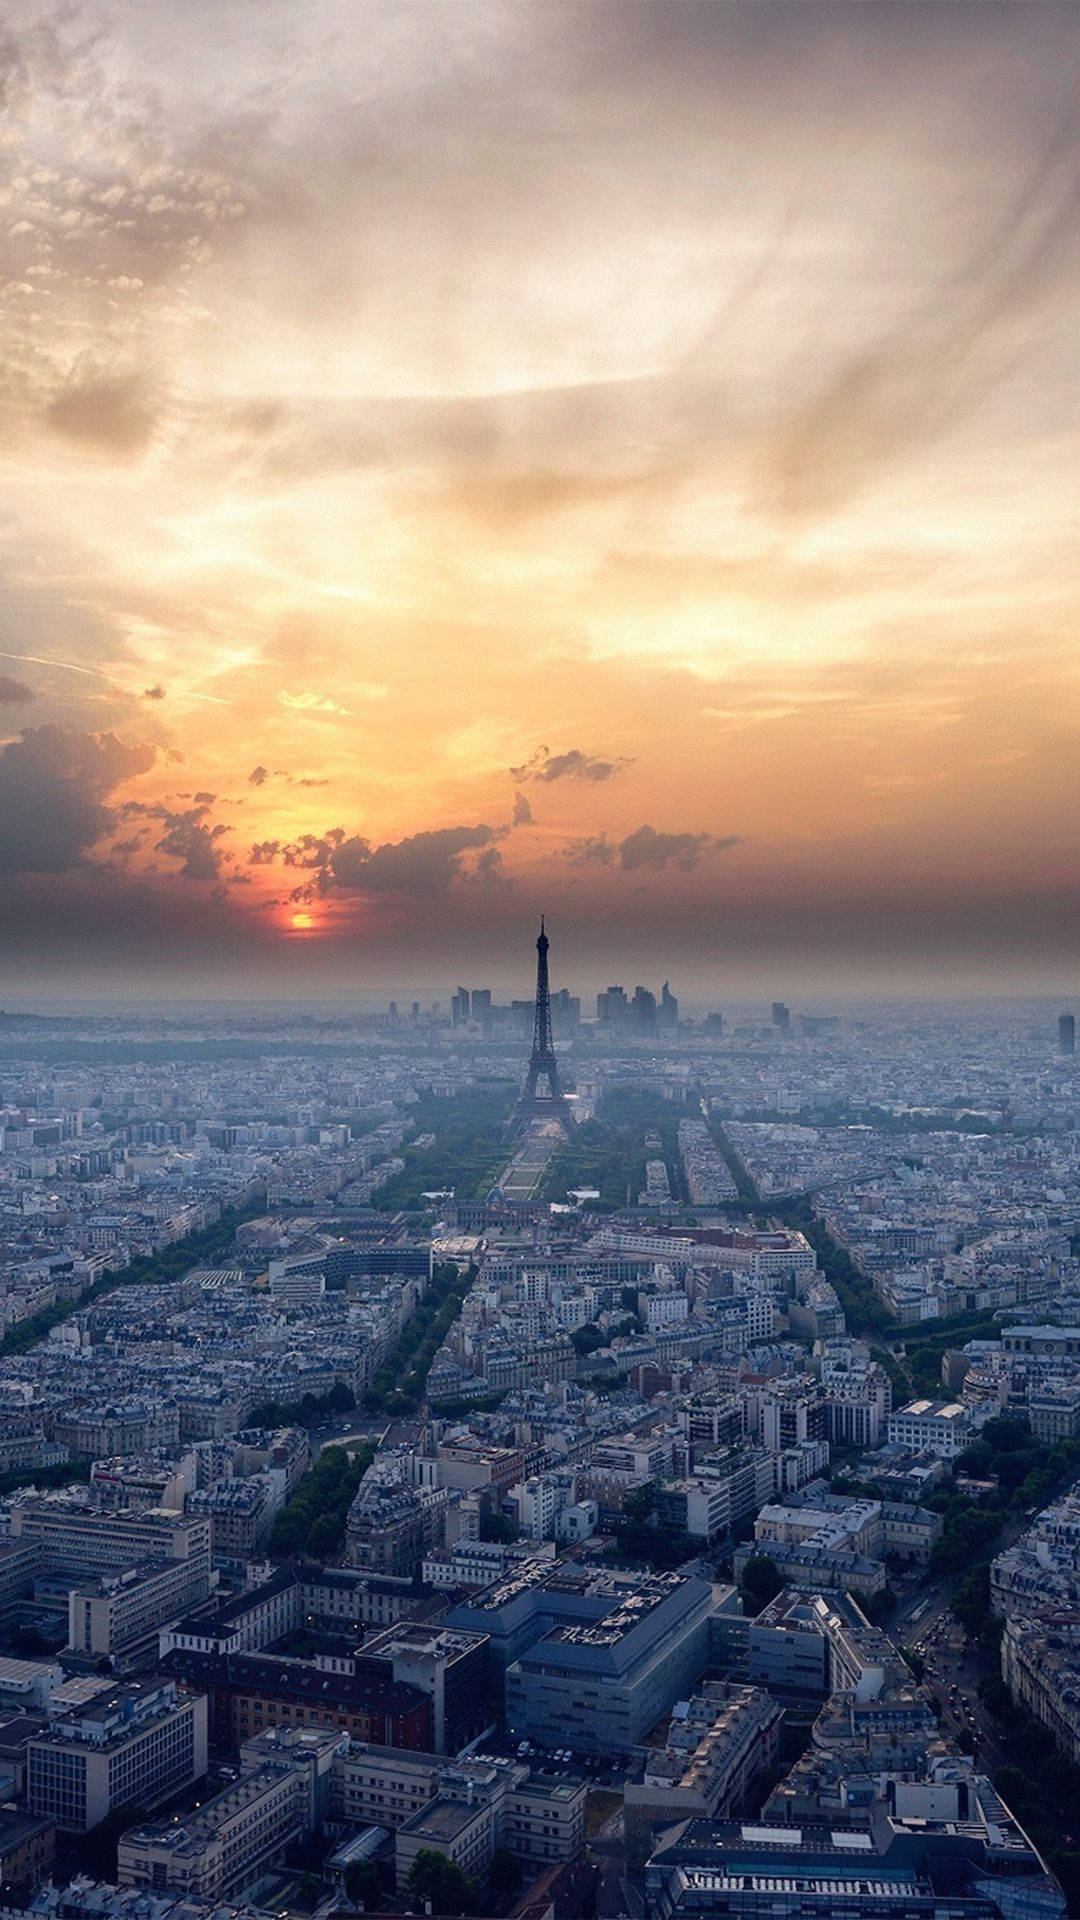 Sky View Of Paris